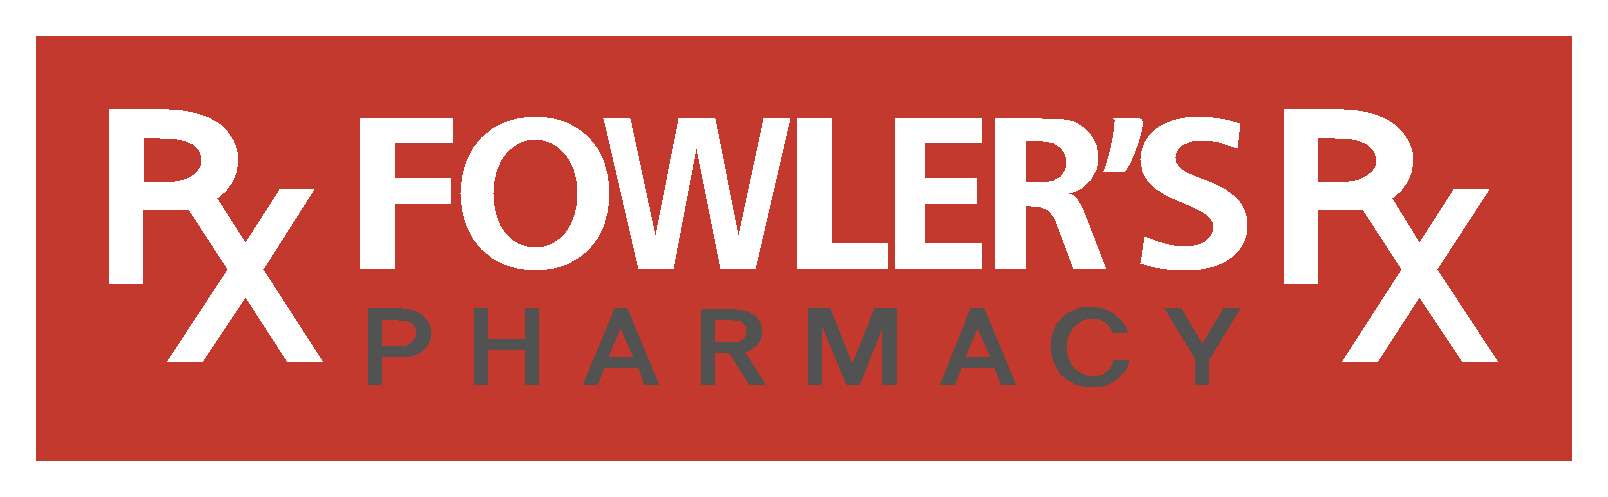 Fowlers Pharmacy